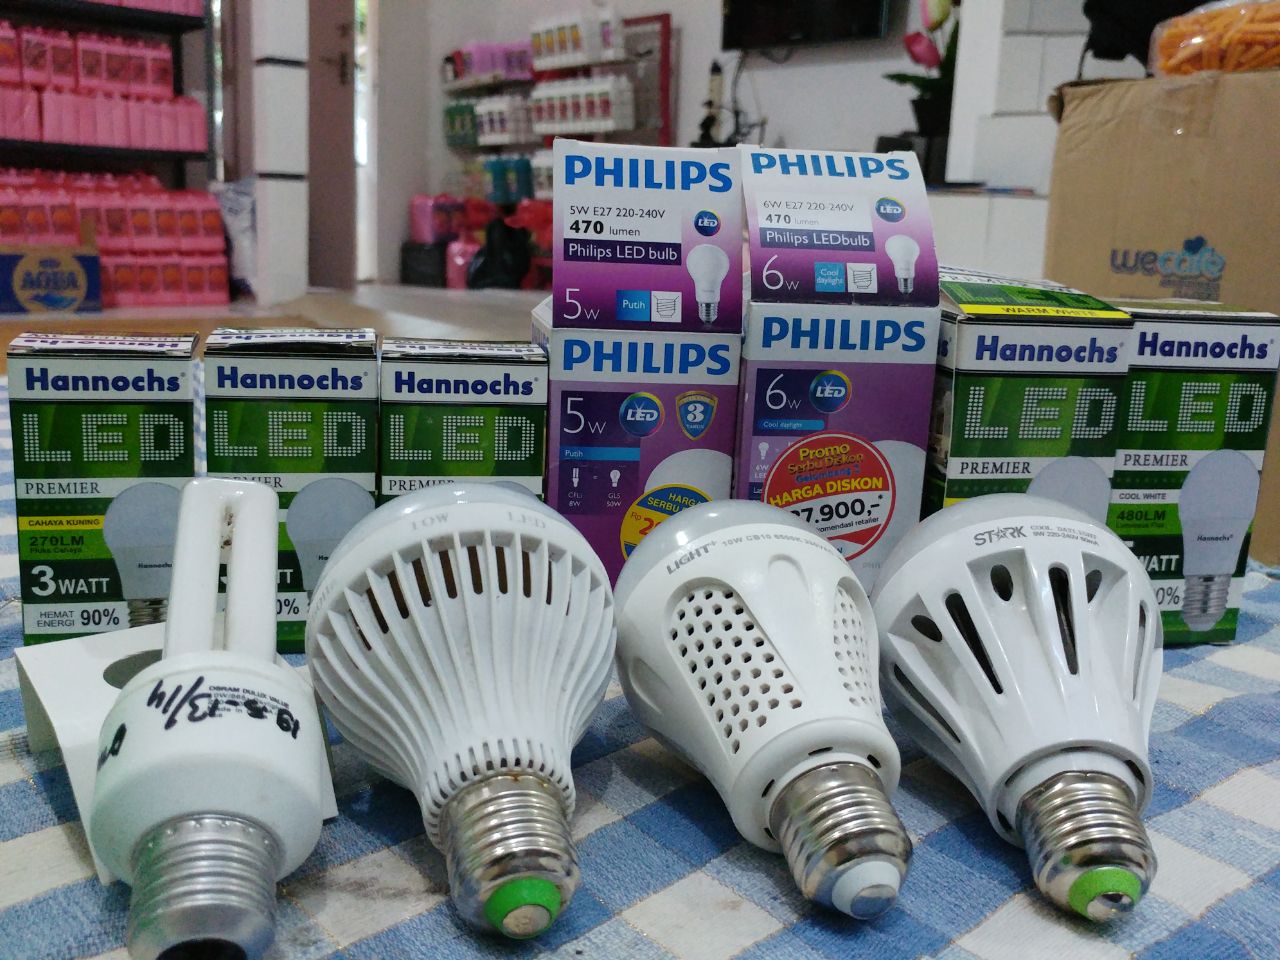 What Ever I wanna Lampu LED Philips vs Hannochs